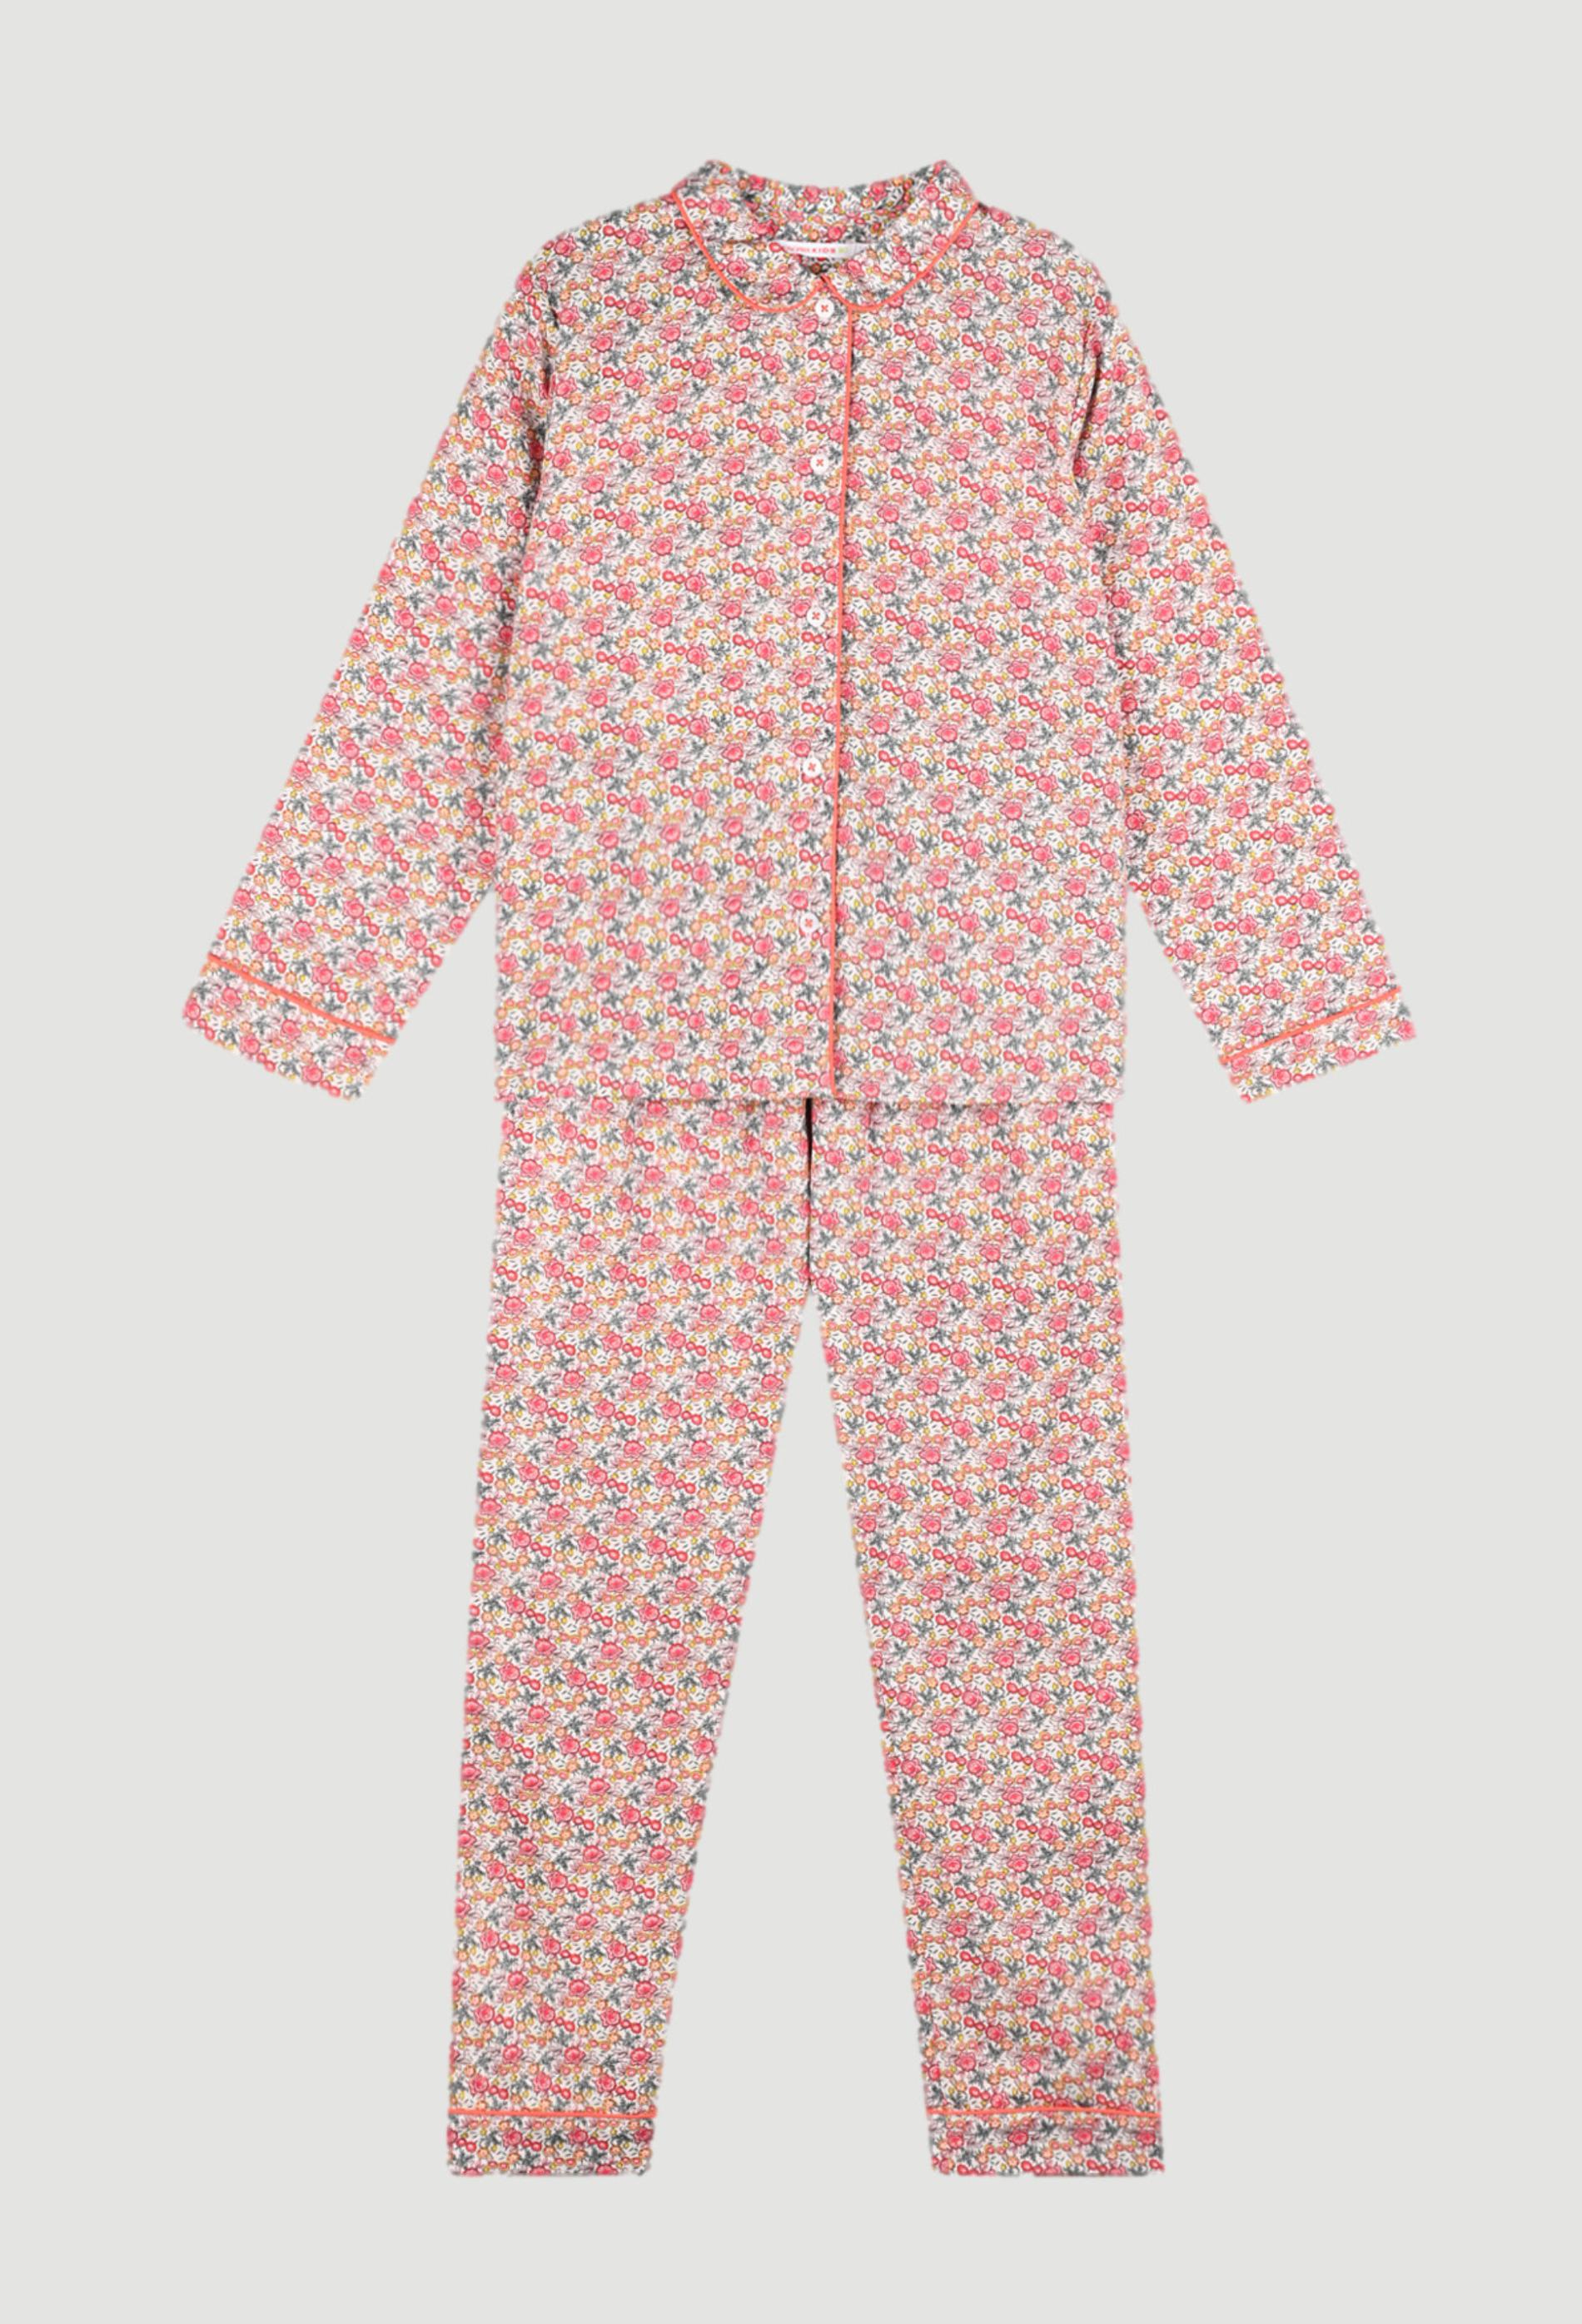 Pyjama long chemise imprimé fleuri, BIO 3 ans rose